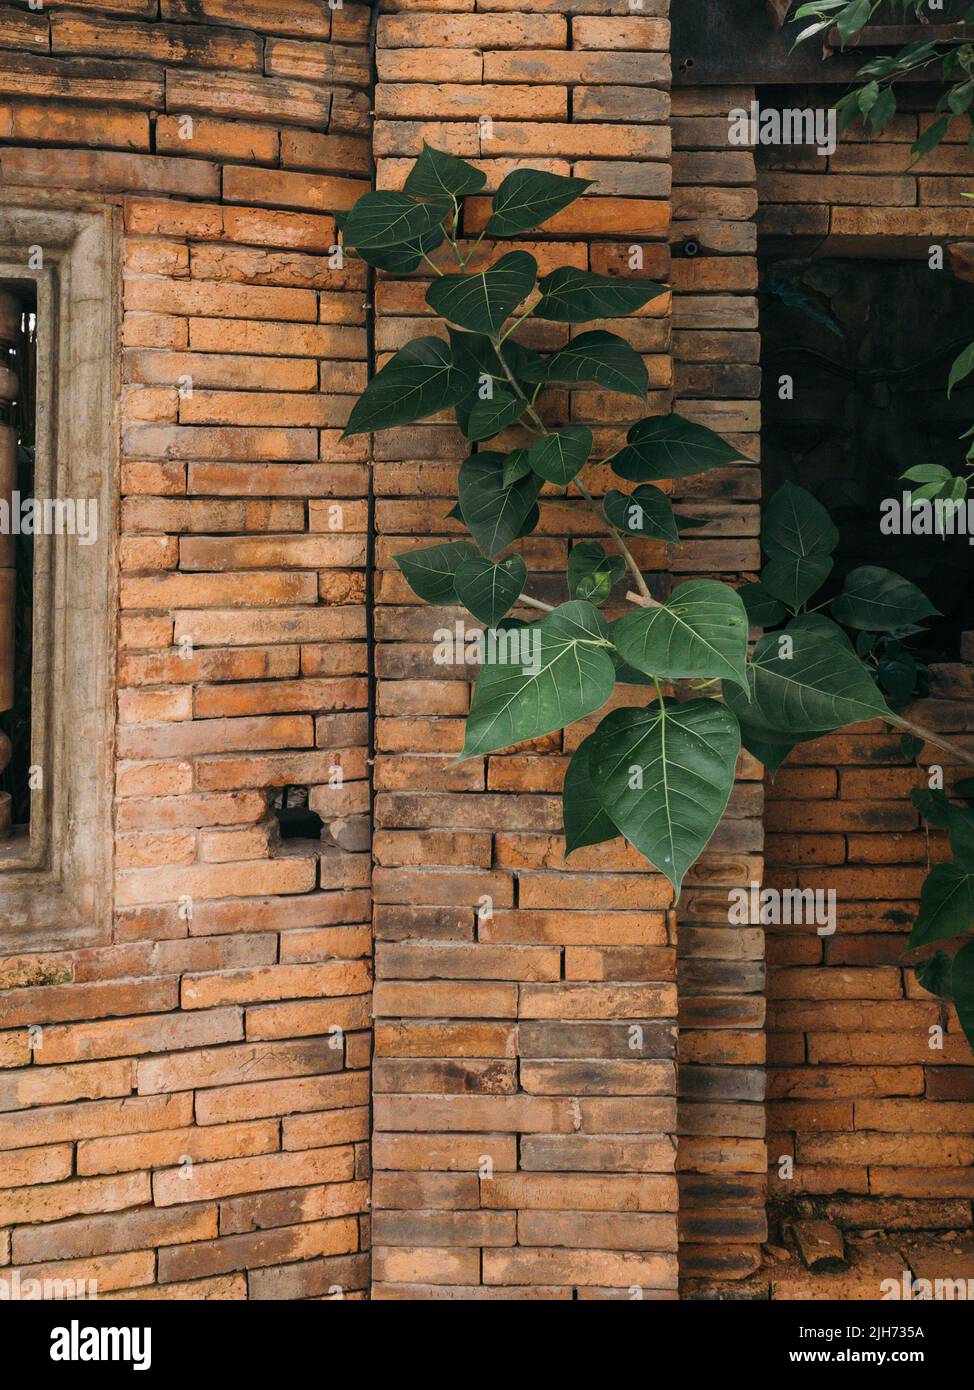 Bodhi leaves growing near brown bricks wall Stock Photo